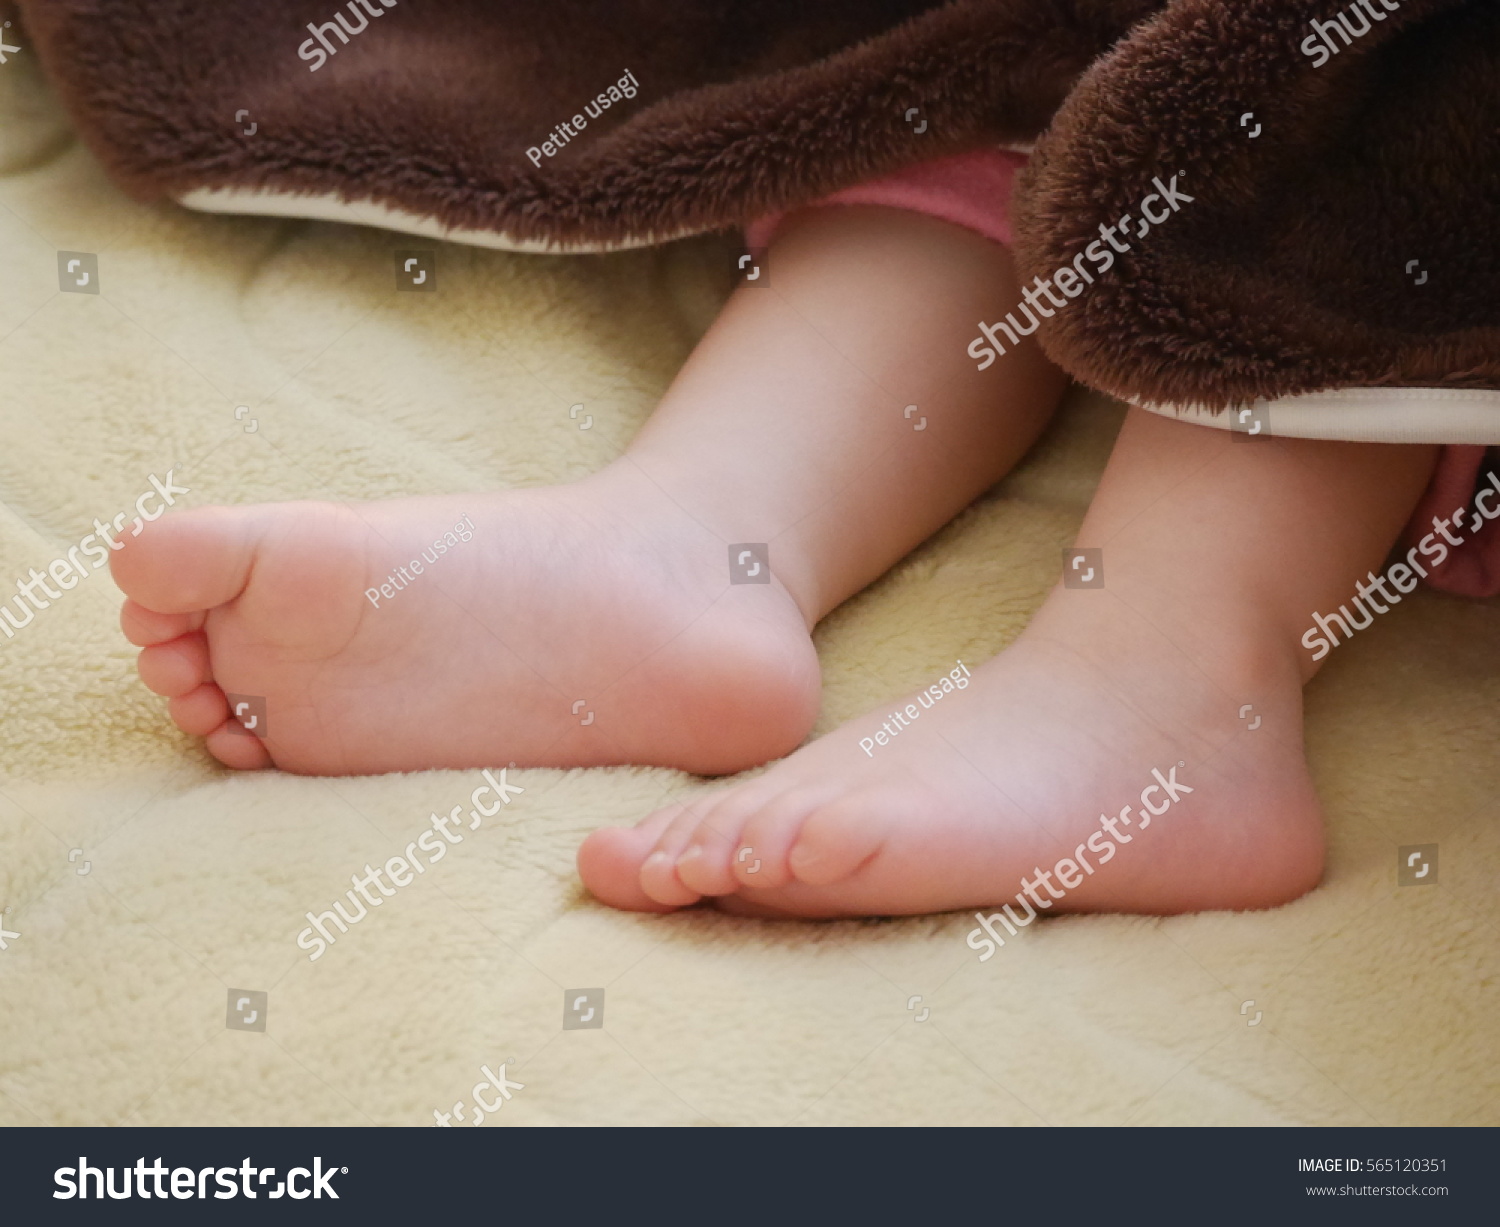 Girl with cute feet